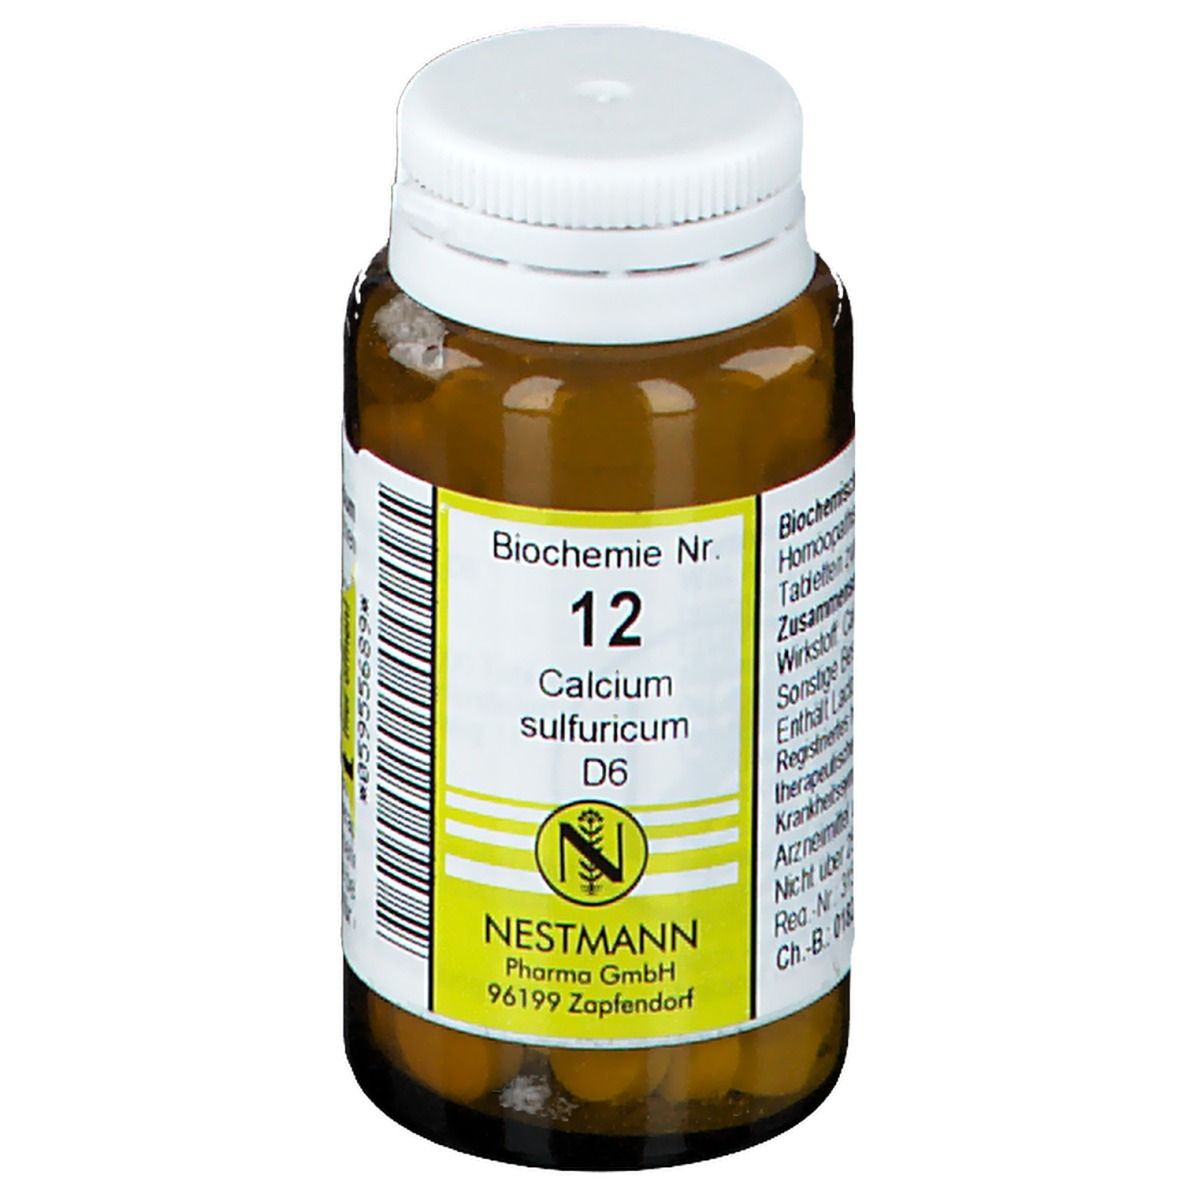 Nestmann Biochemie Nr. 12 Calcium sulfuricum D6